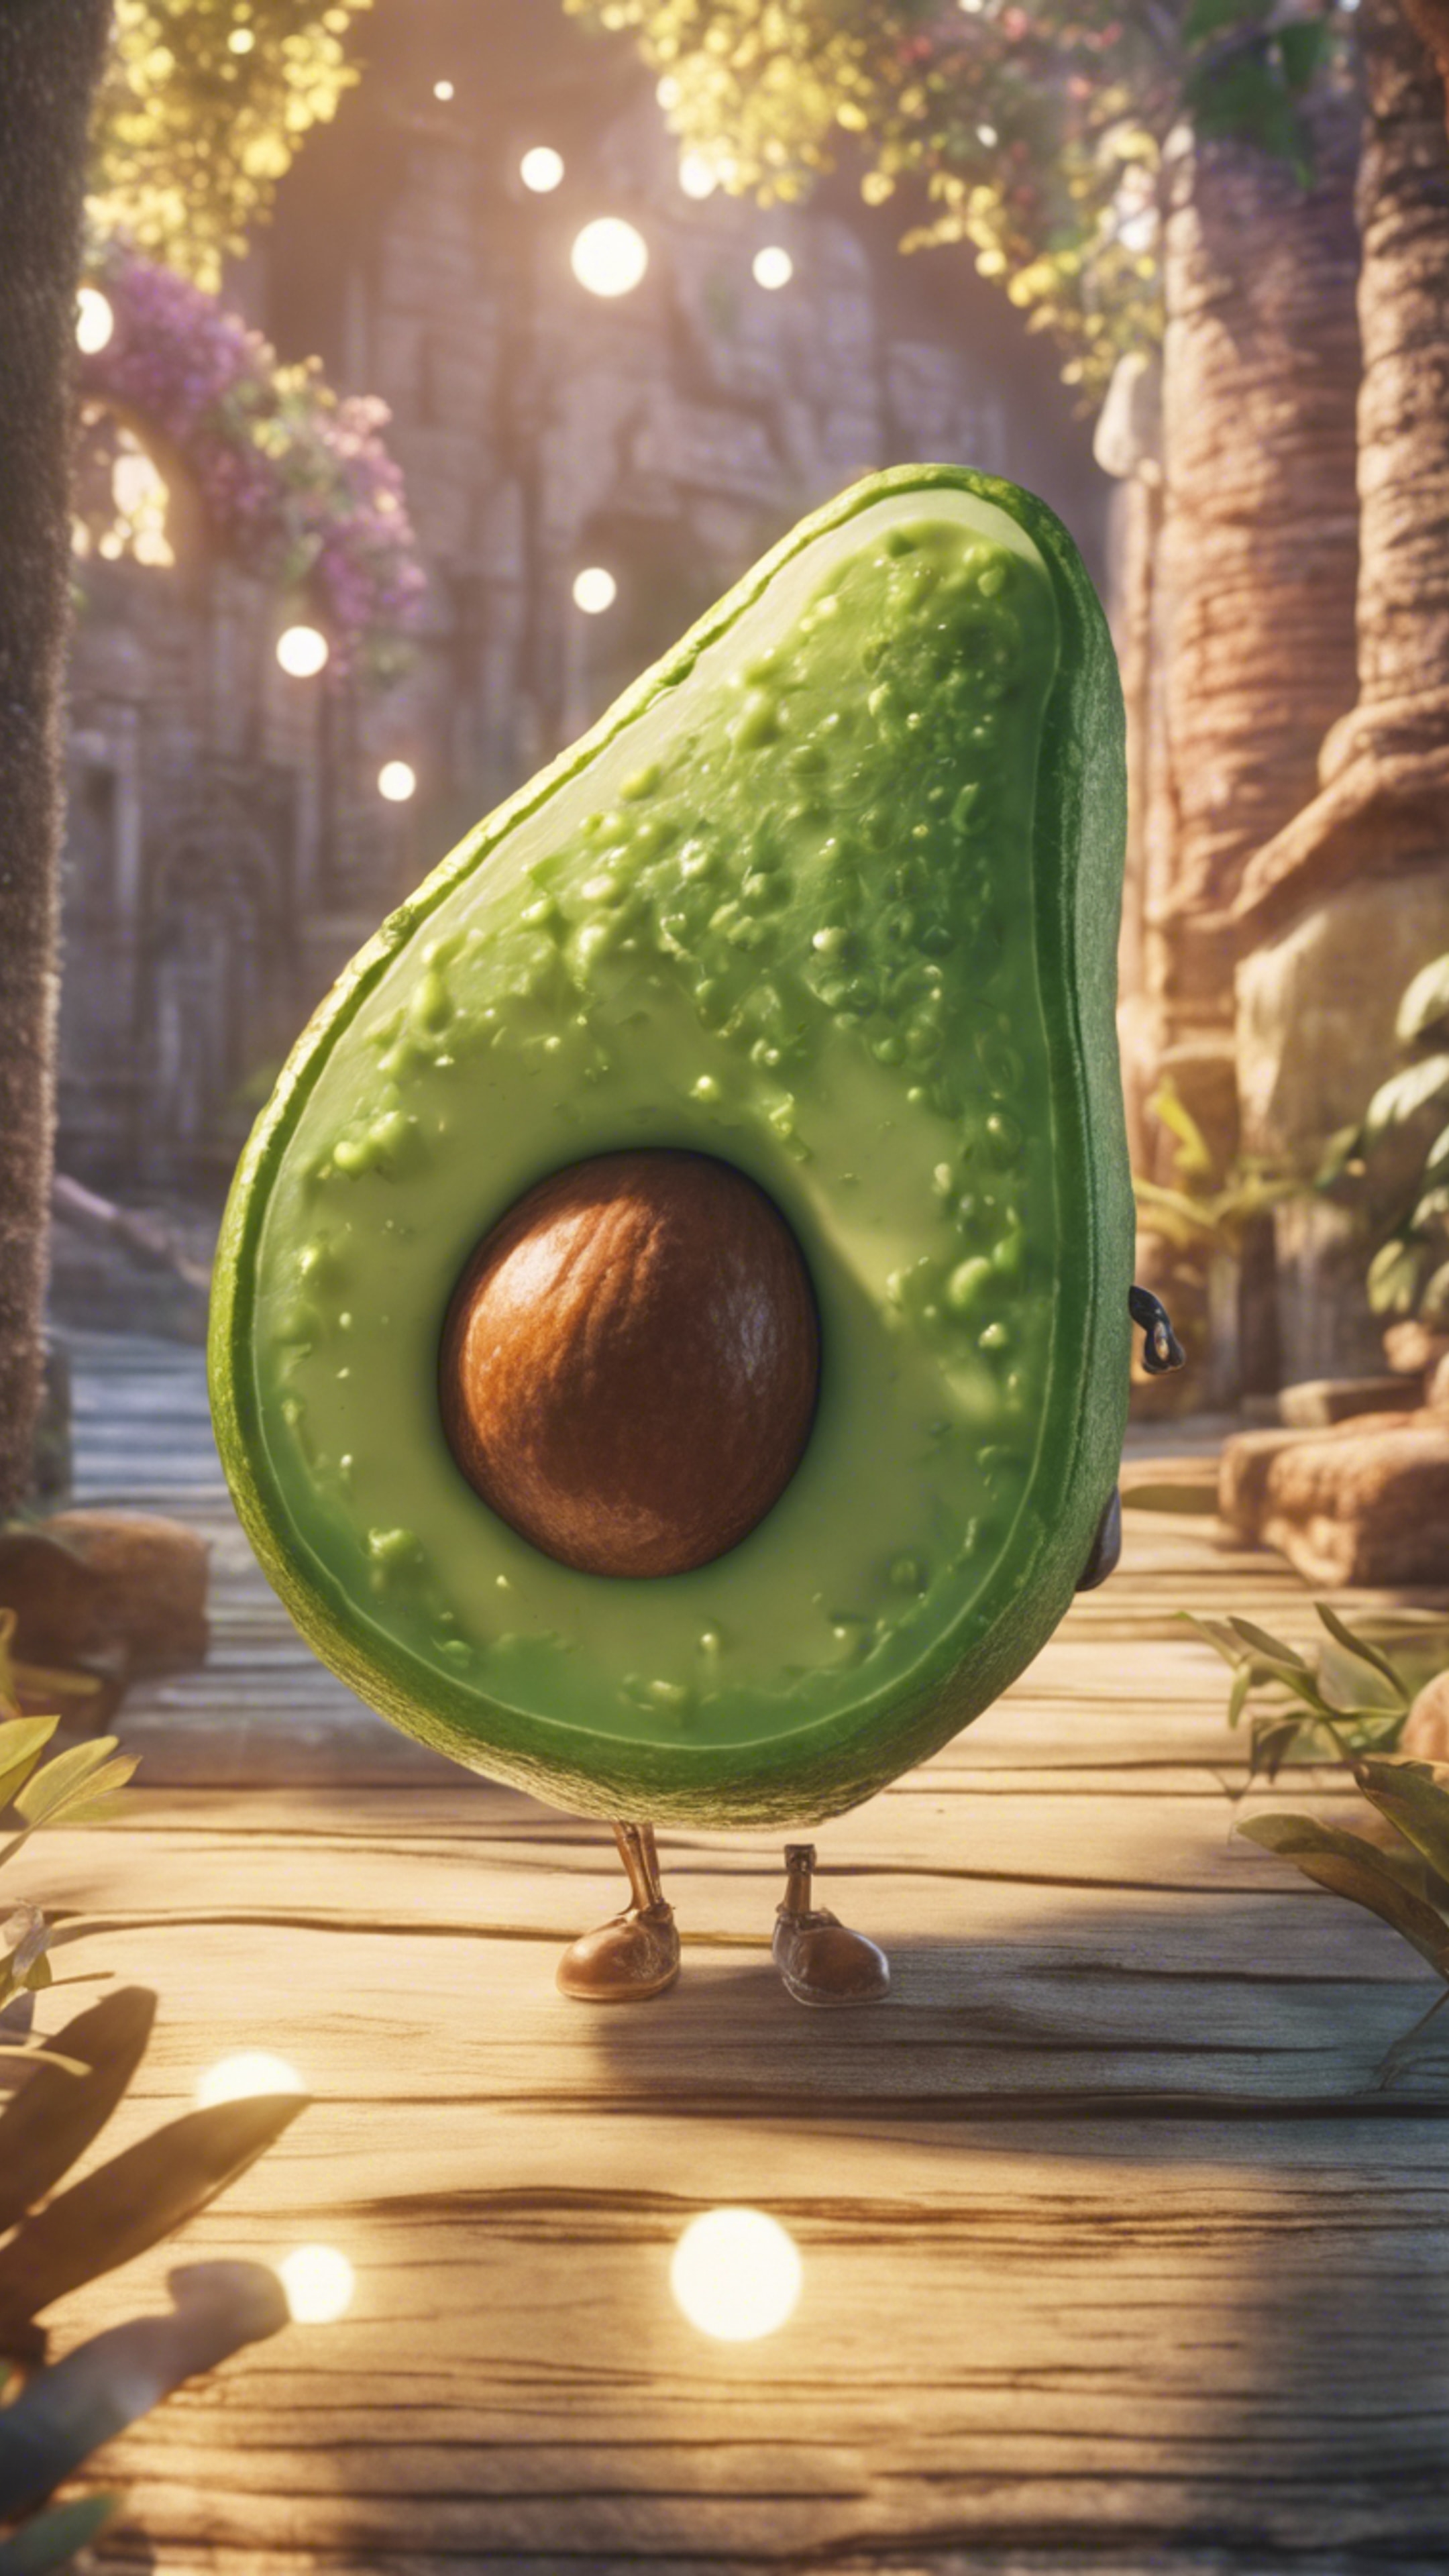 A manga-style scene of an avocado on a magical journey Behang[452ab1c8ad254f0b95e7]